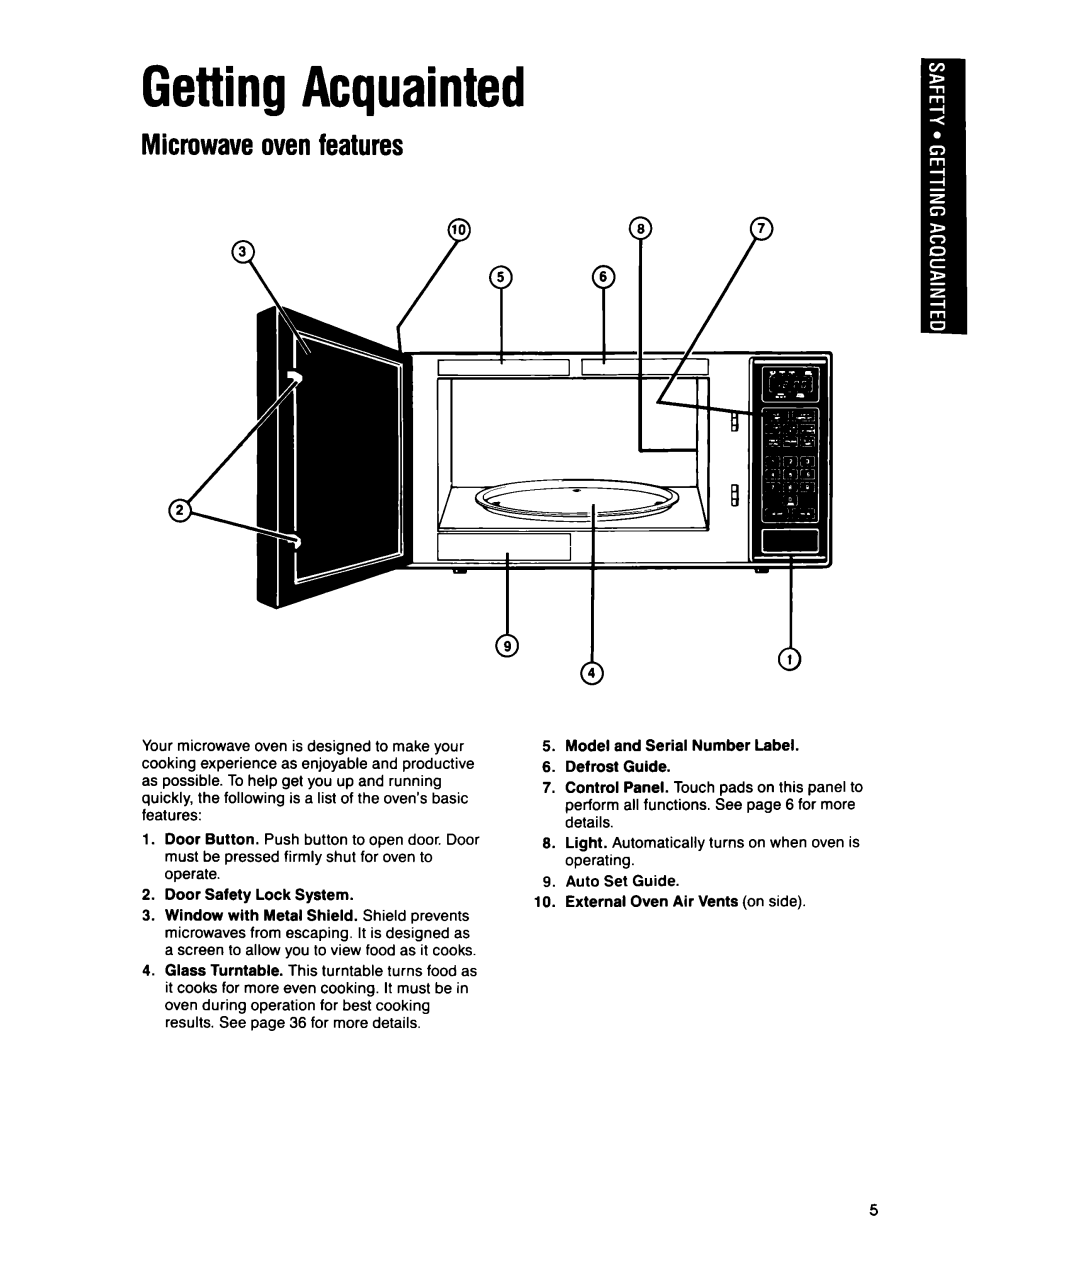 Whirlpool MTZ080XY user manual GettingAcquainted, Microwaveoven features 